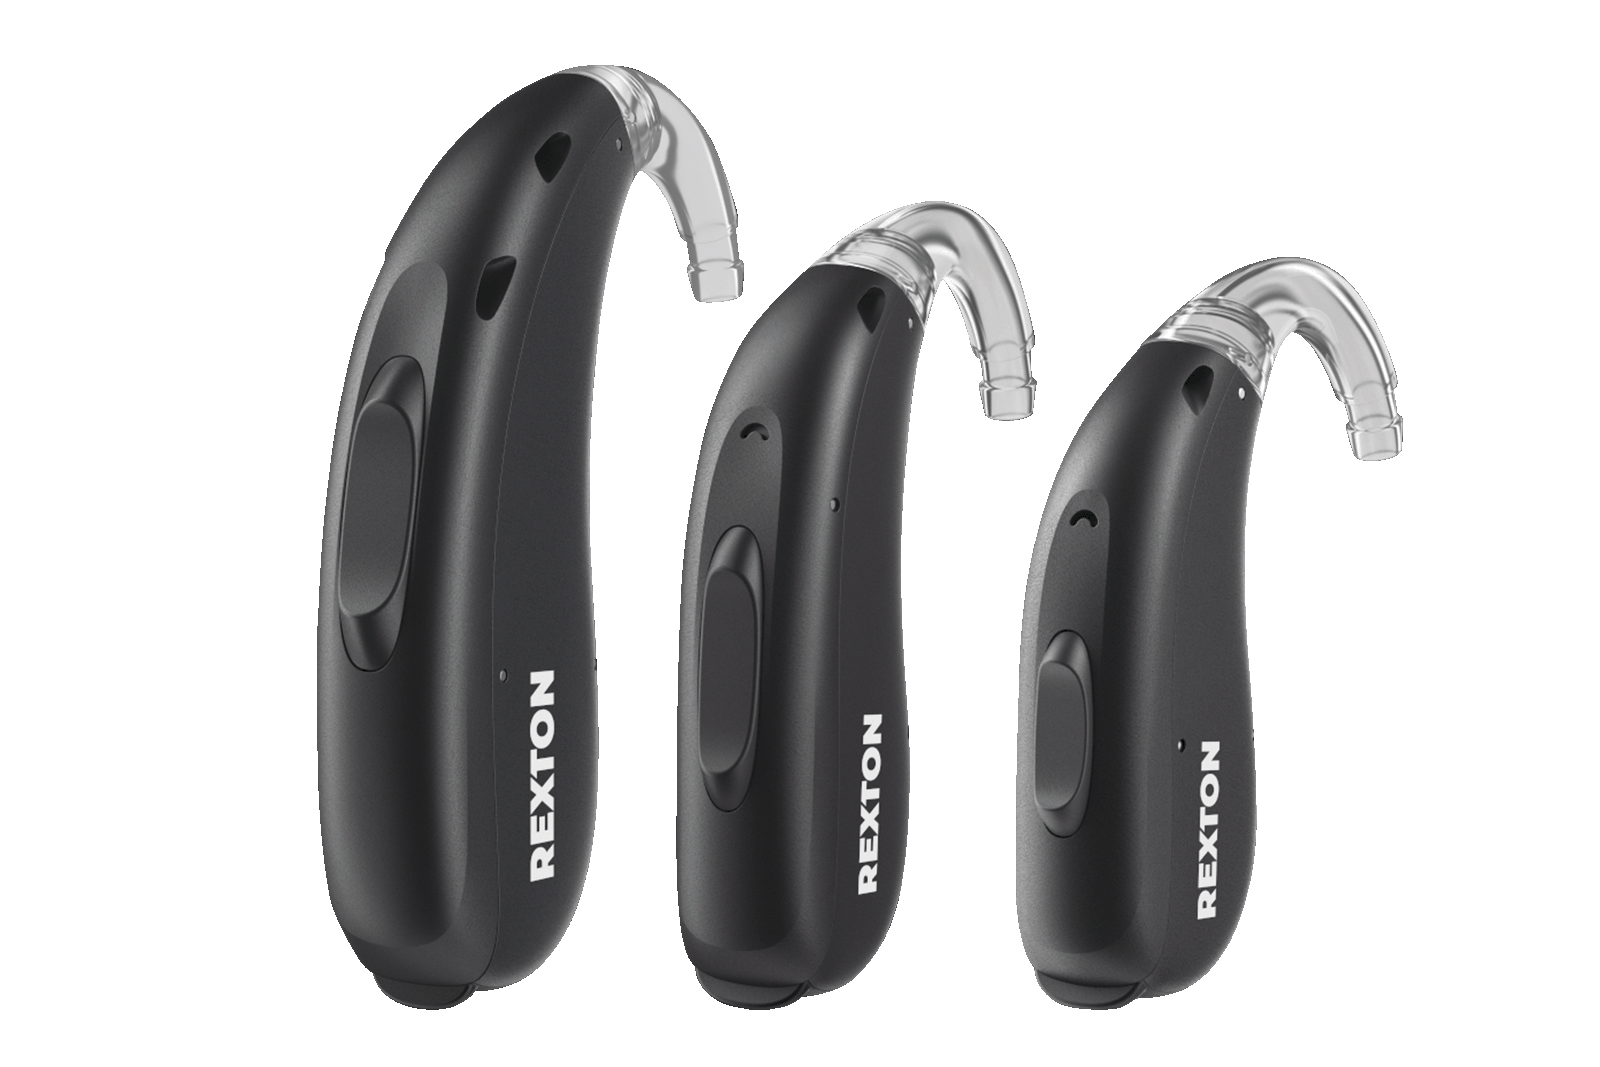 Rexton BiCore BTE hearing aid model range